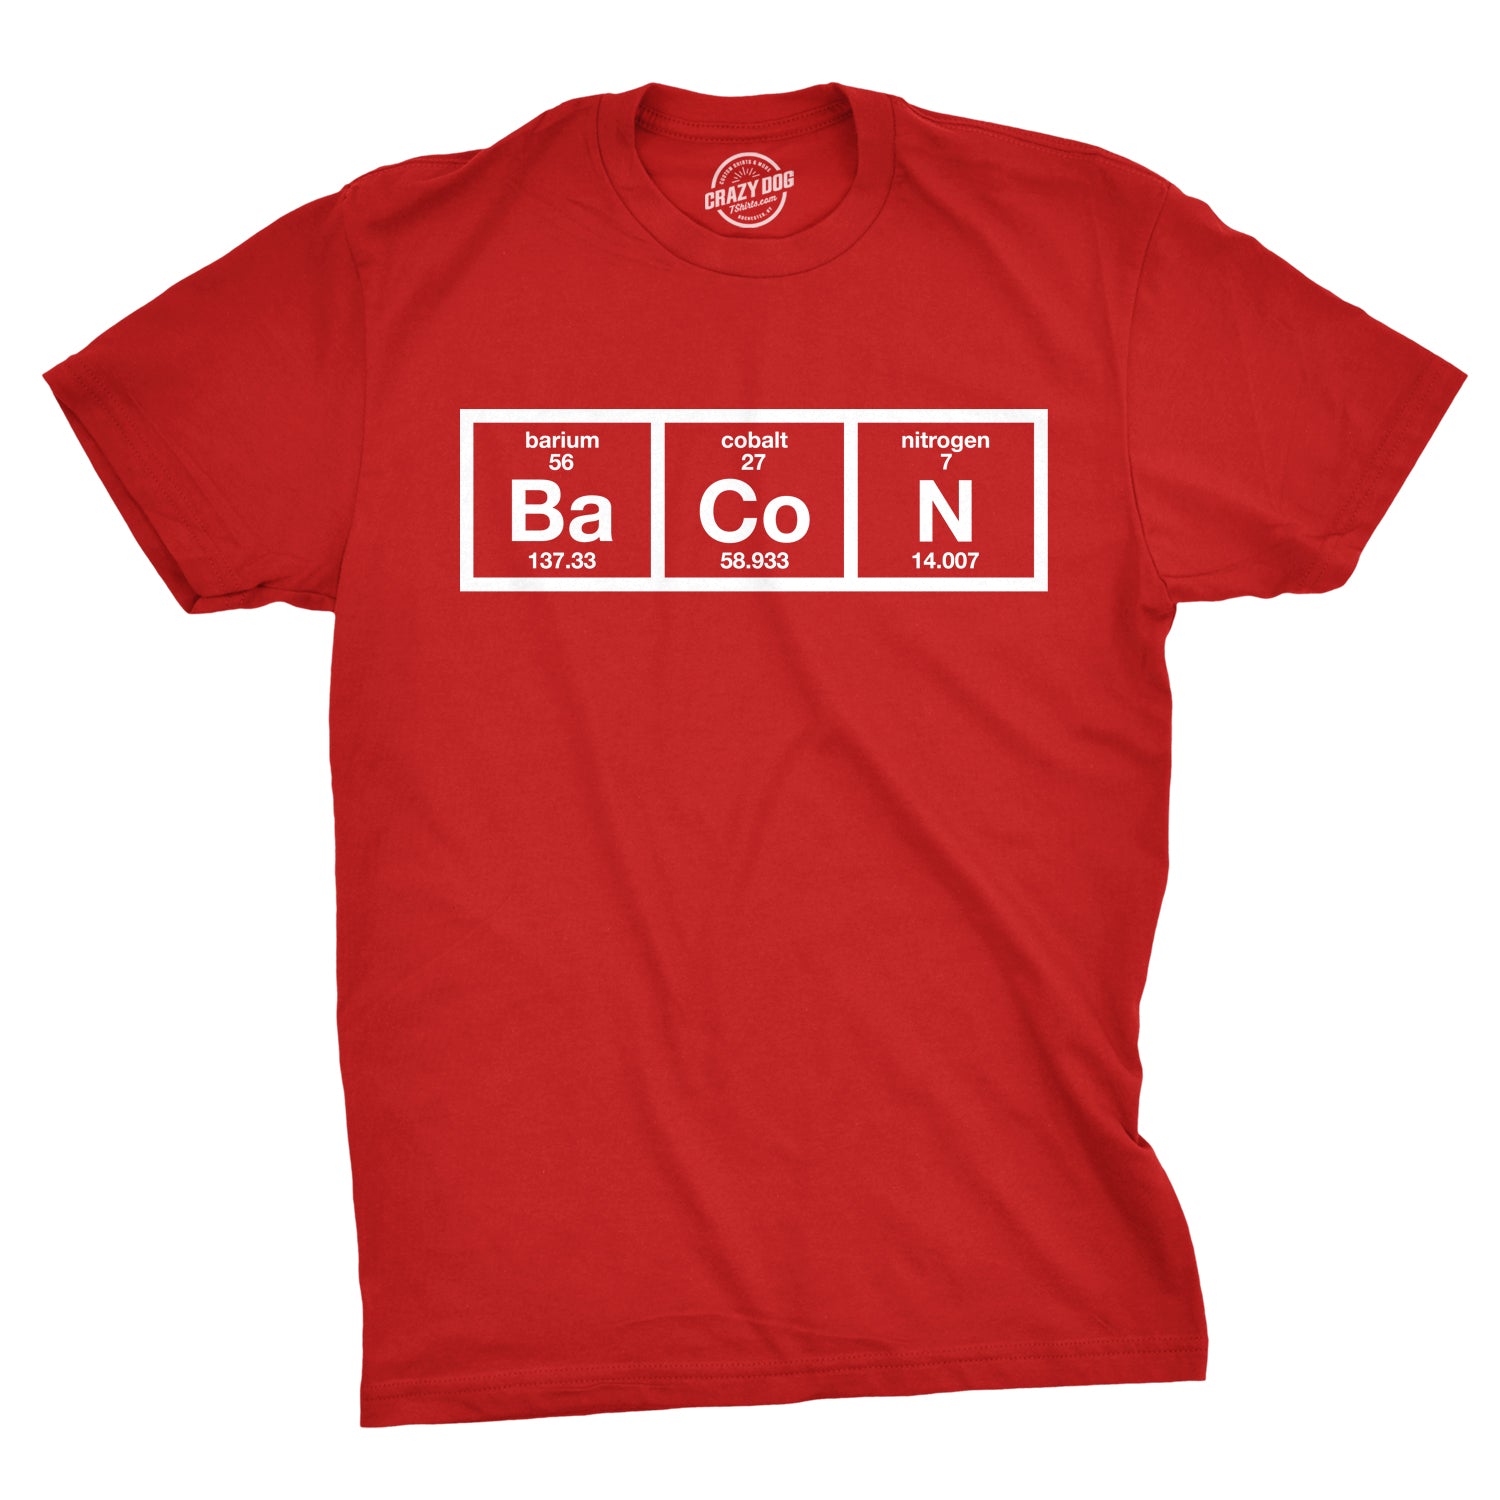 Funny science t shirts Geek Science tee Shirt' Men's T-Shirt